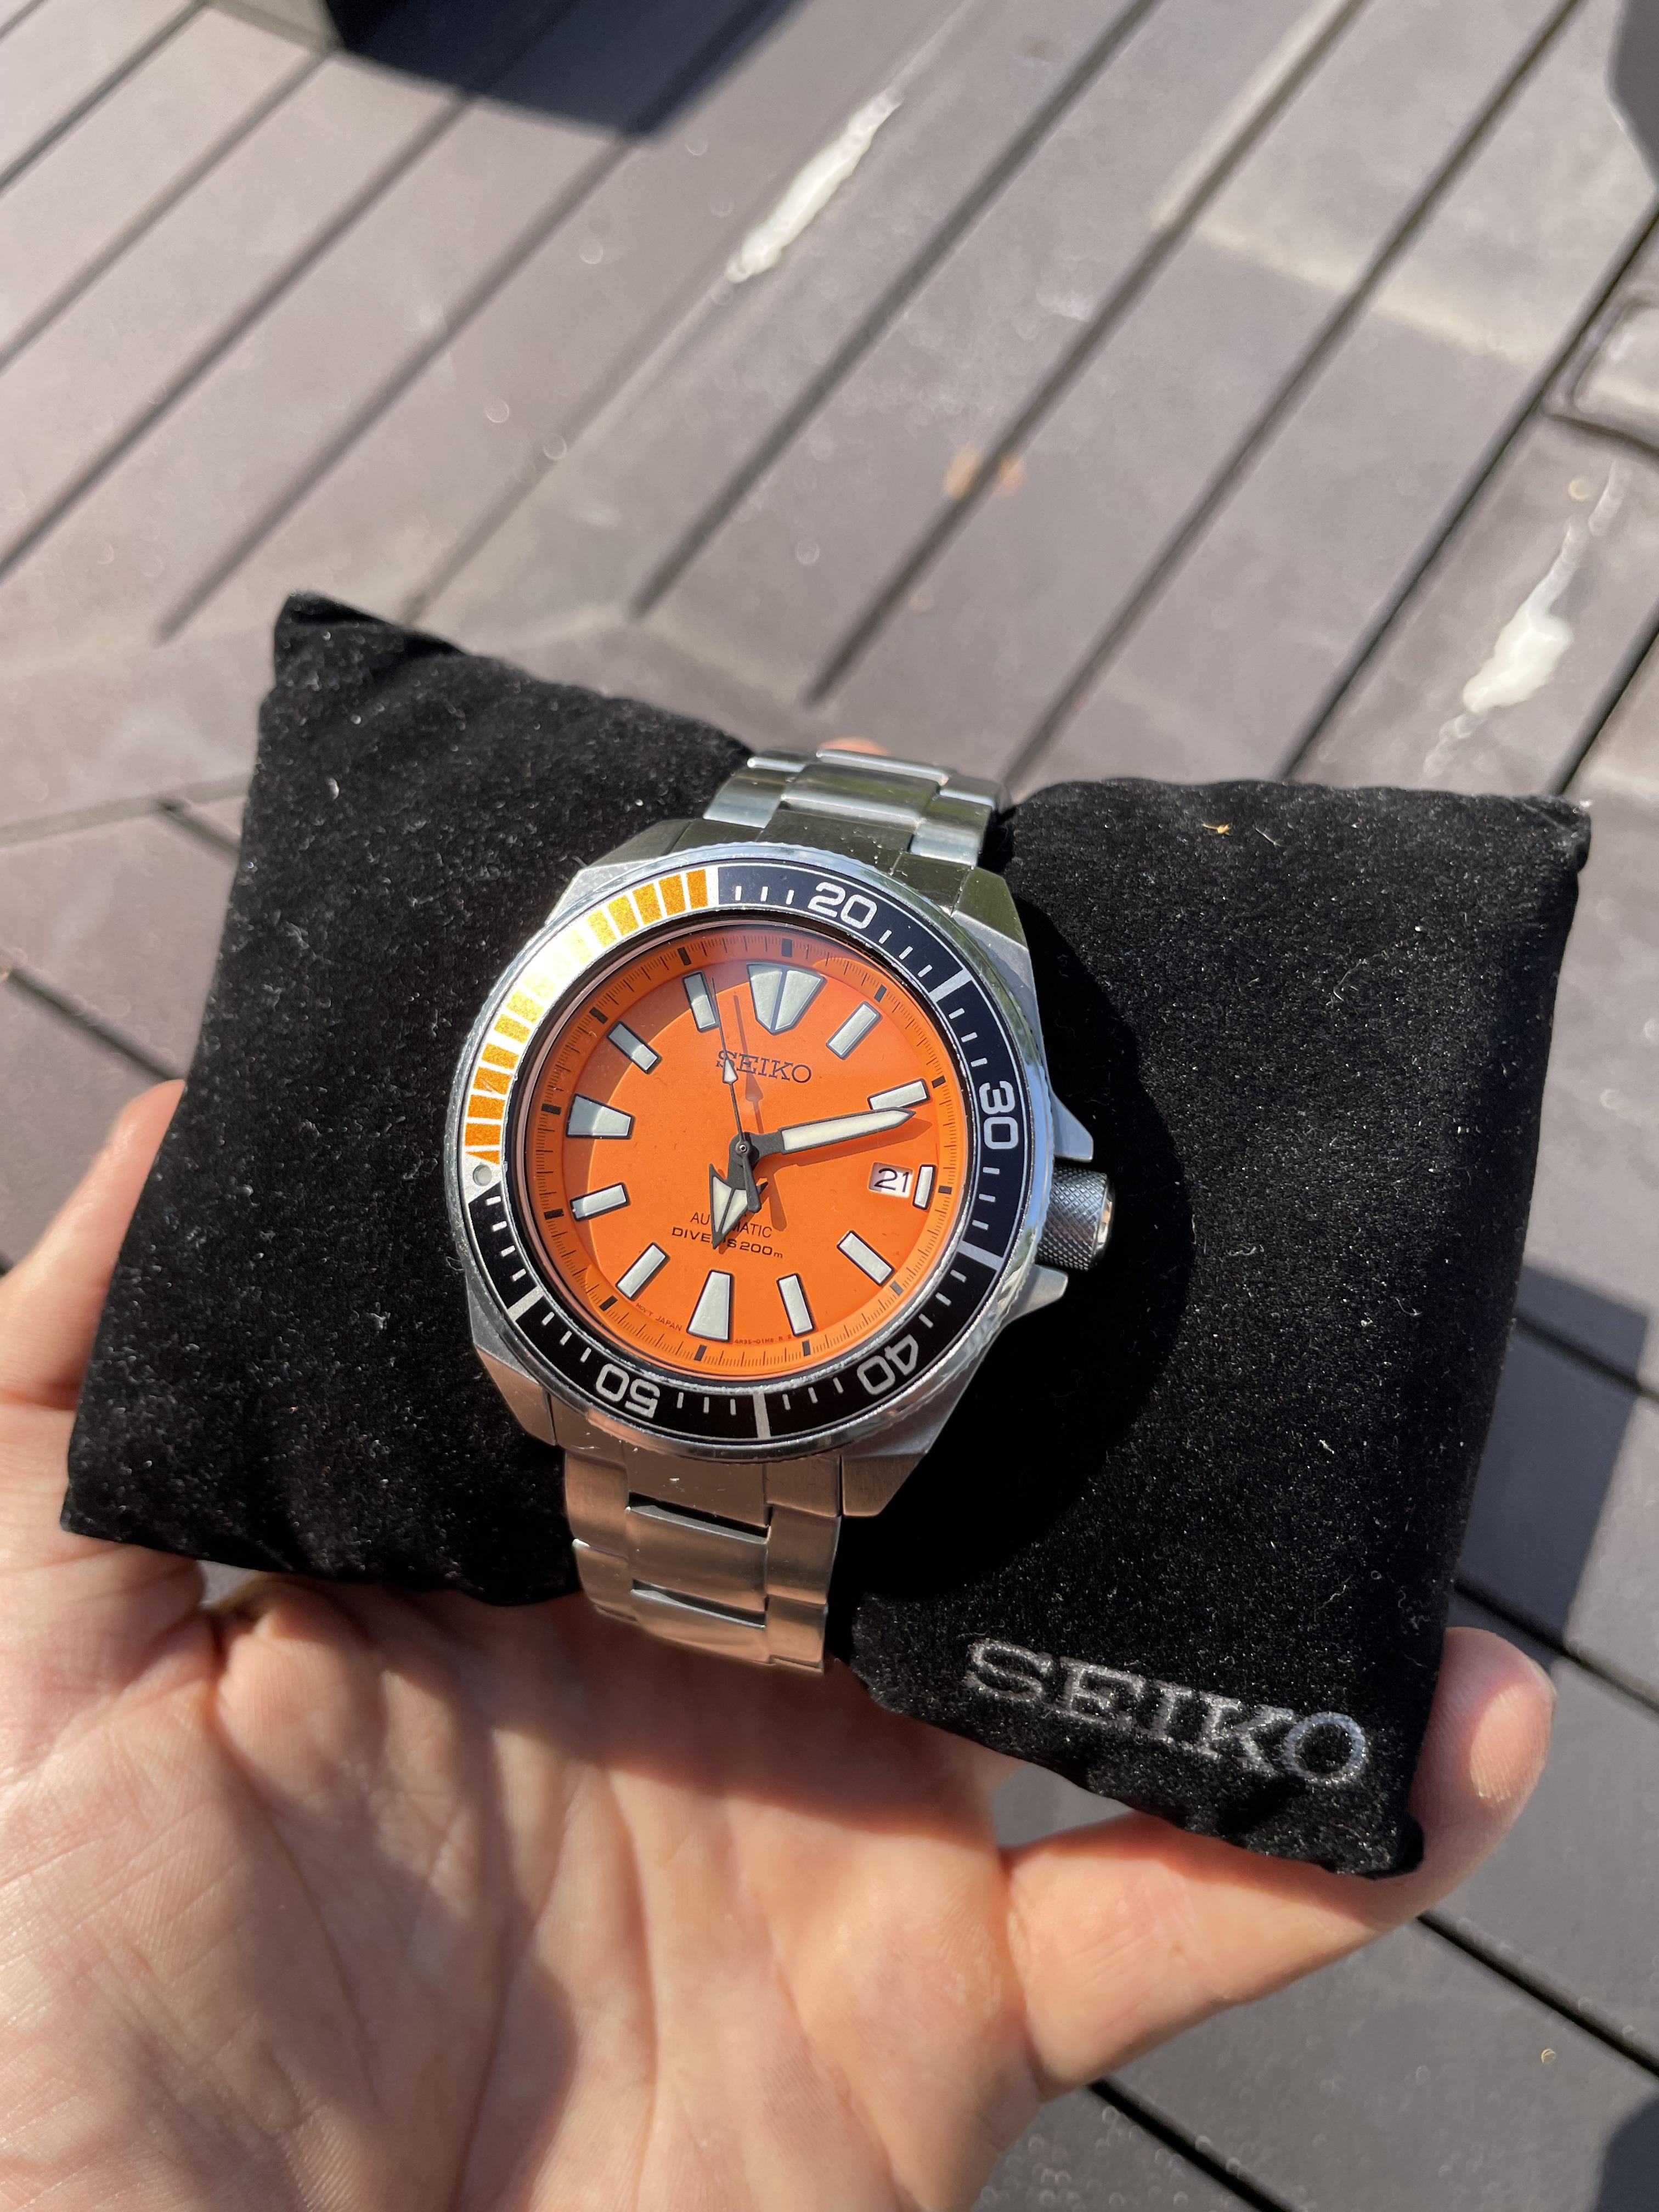 WTS] Seiko SRPC07 Orange Samurai / Full Kit / Beautiful condition WatchCharts